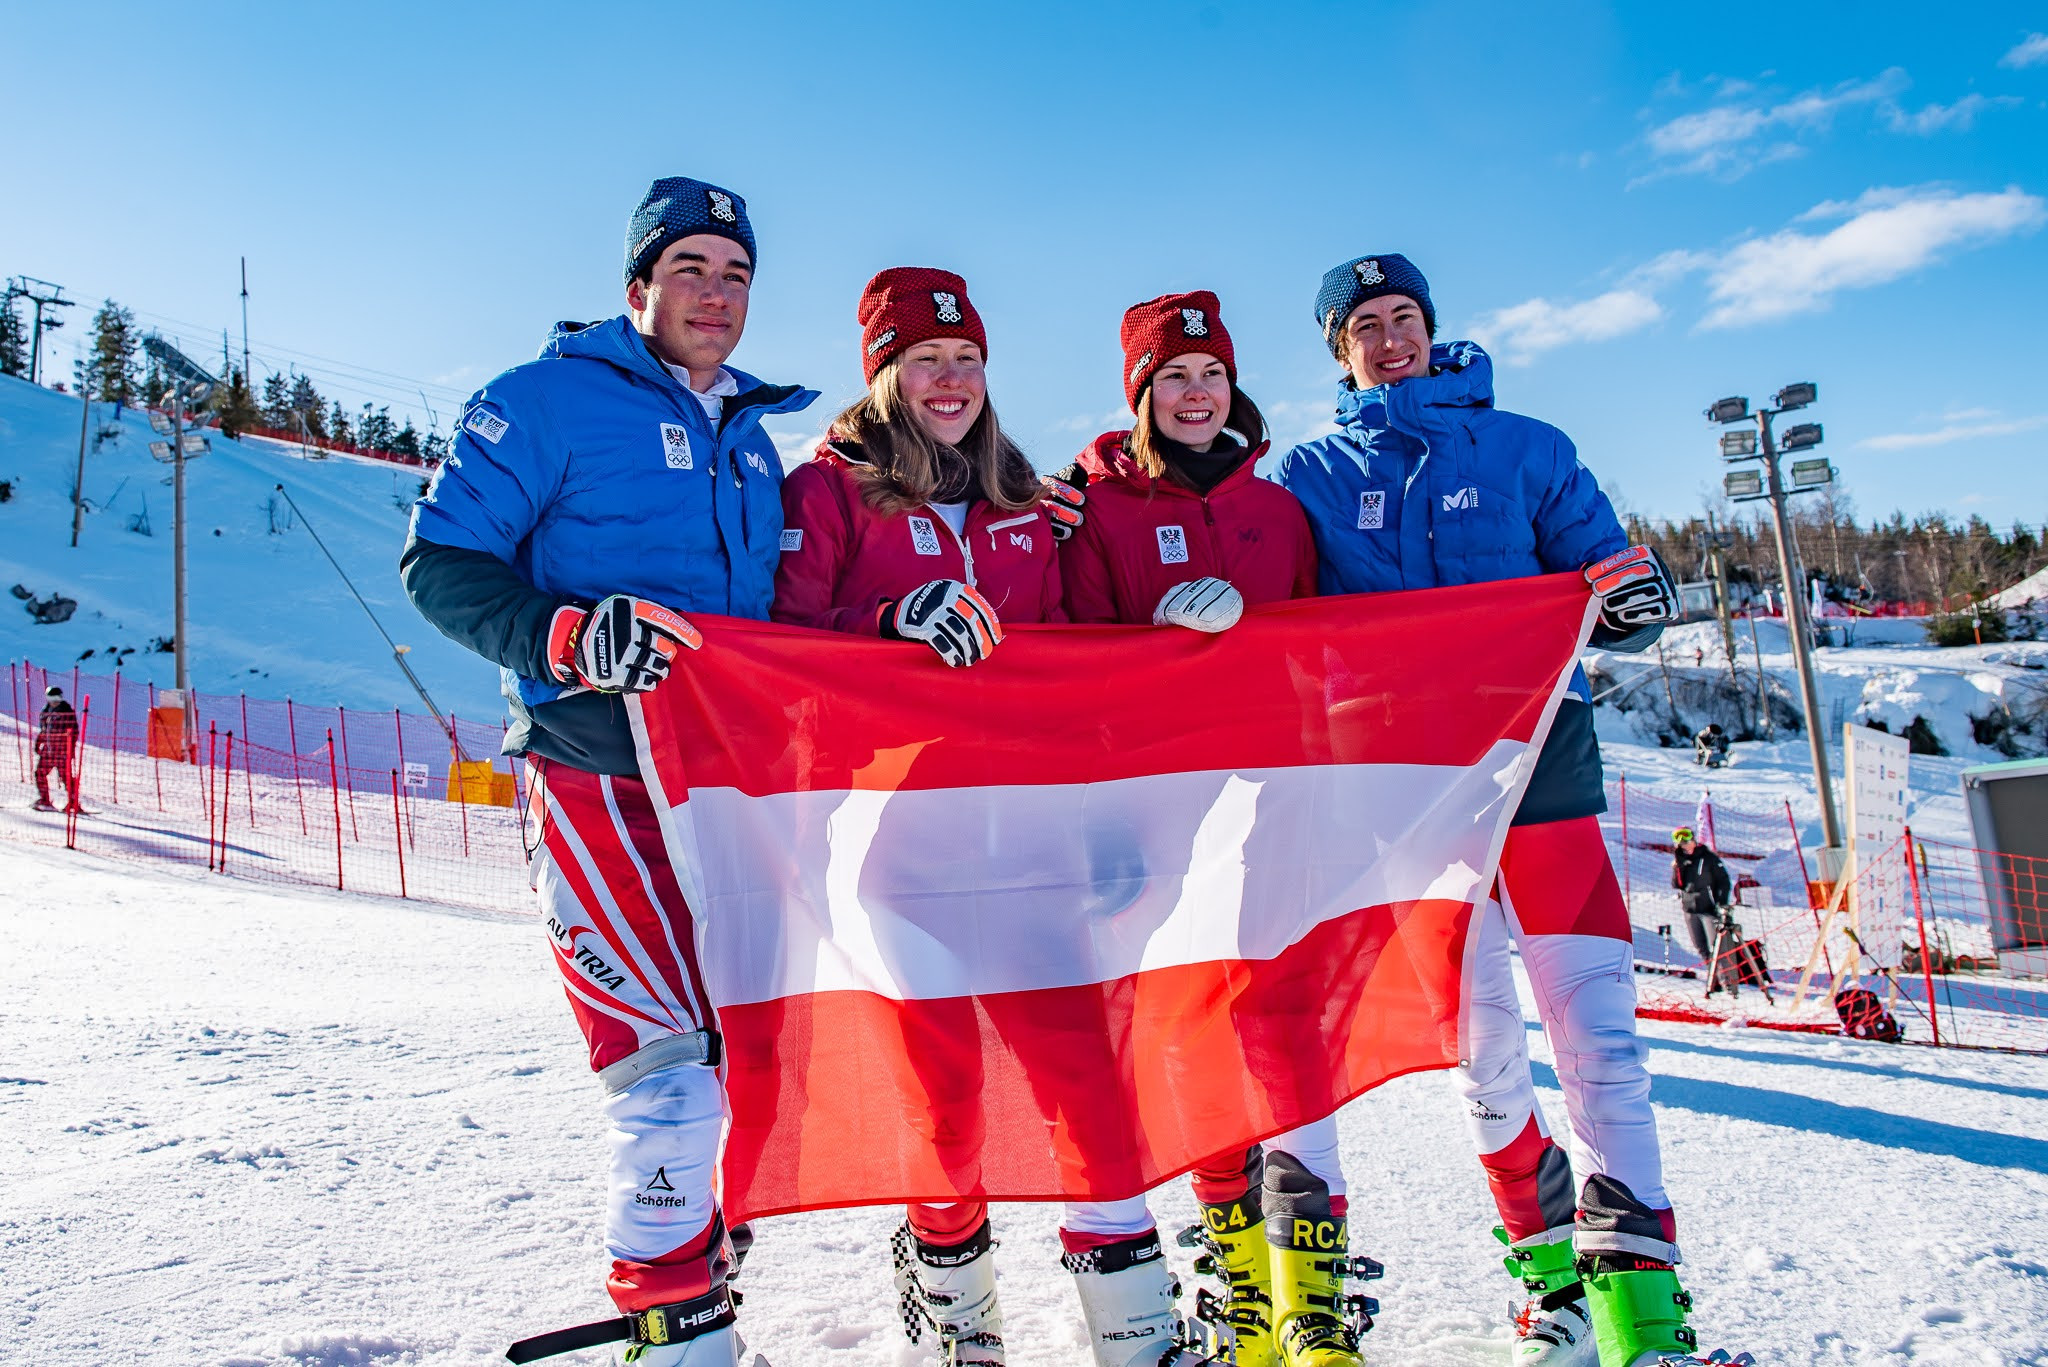 Austria has performed strongly at the Winter EYOF in Vuokatti, including winning the team event yesterday ©Hannu Kilpeläinen/EYOF 2022 Vuokatti